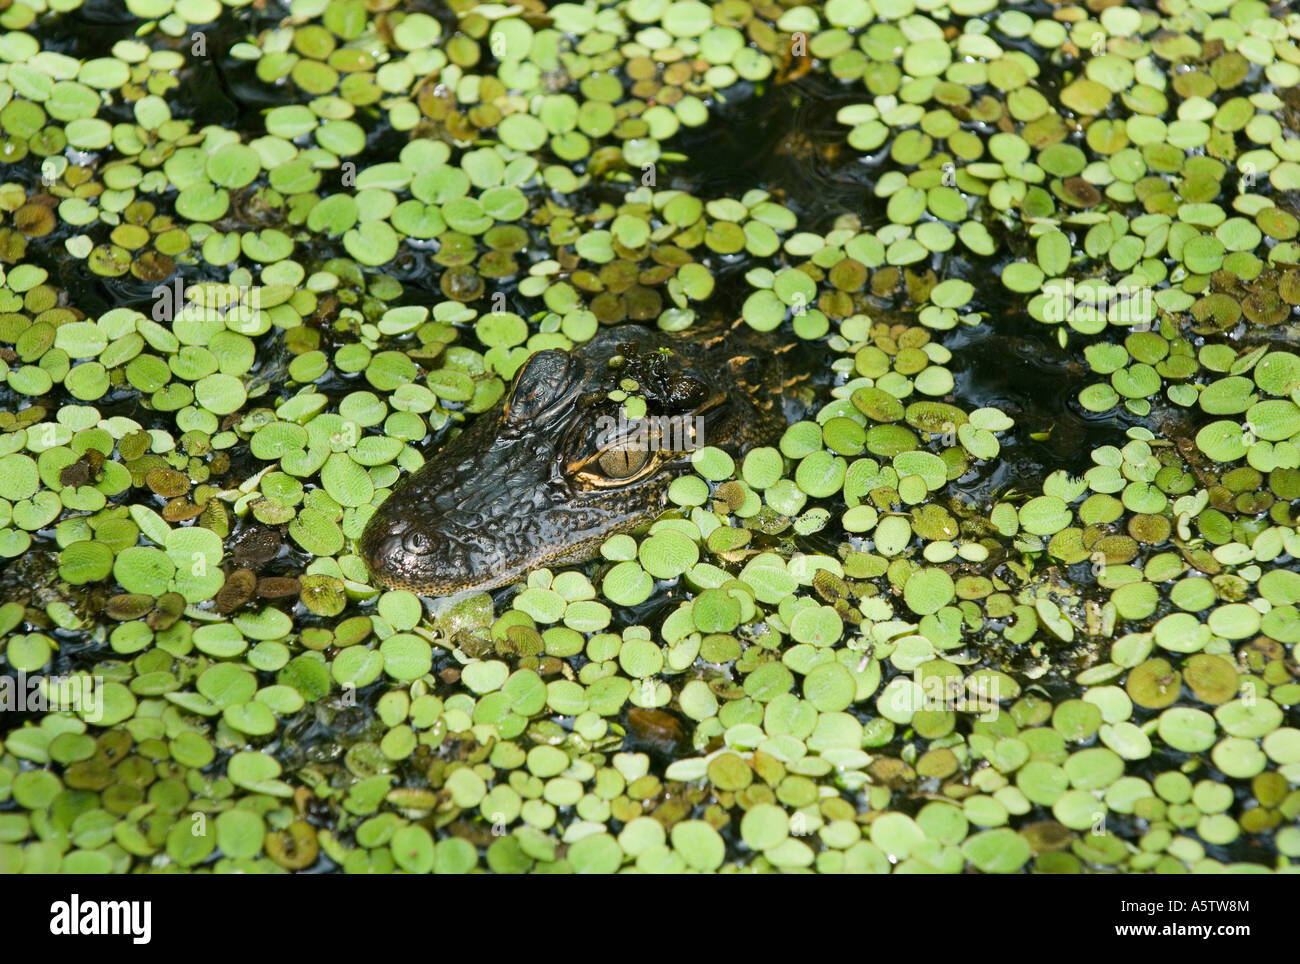 American Alligator (Alligator mississippiensis) In duckweed, Audubon Corkscrew Swamp Sanctuary, South Florida Stock Photo